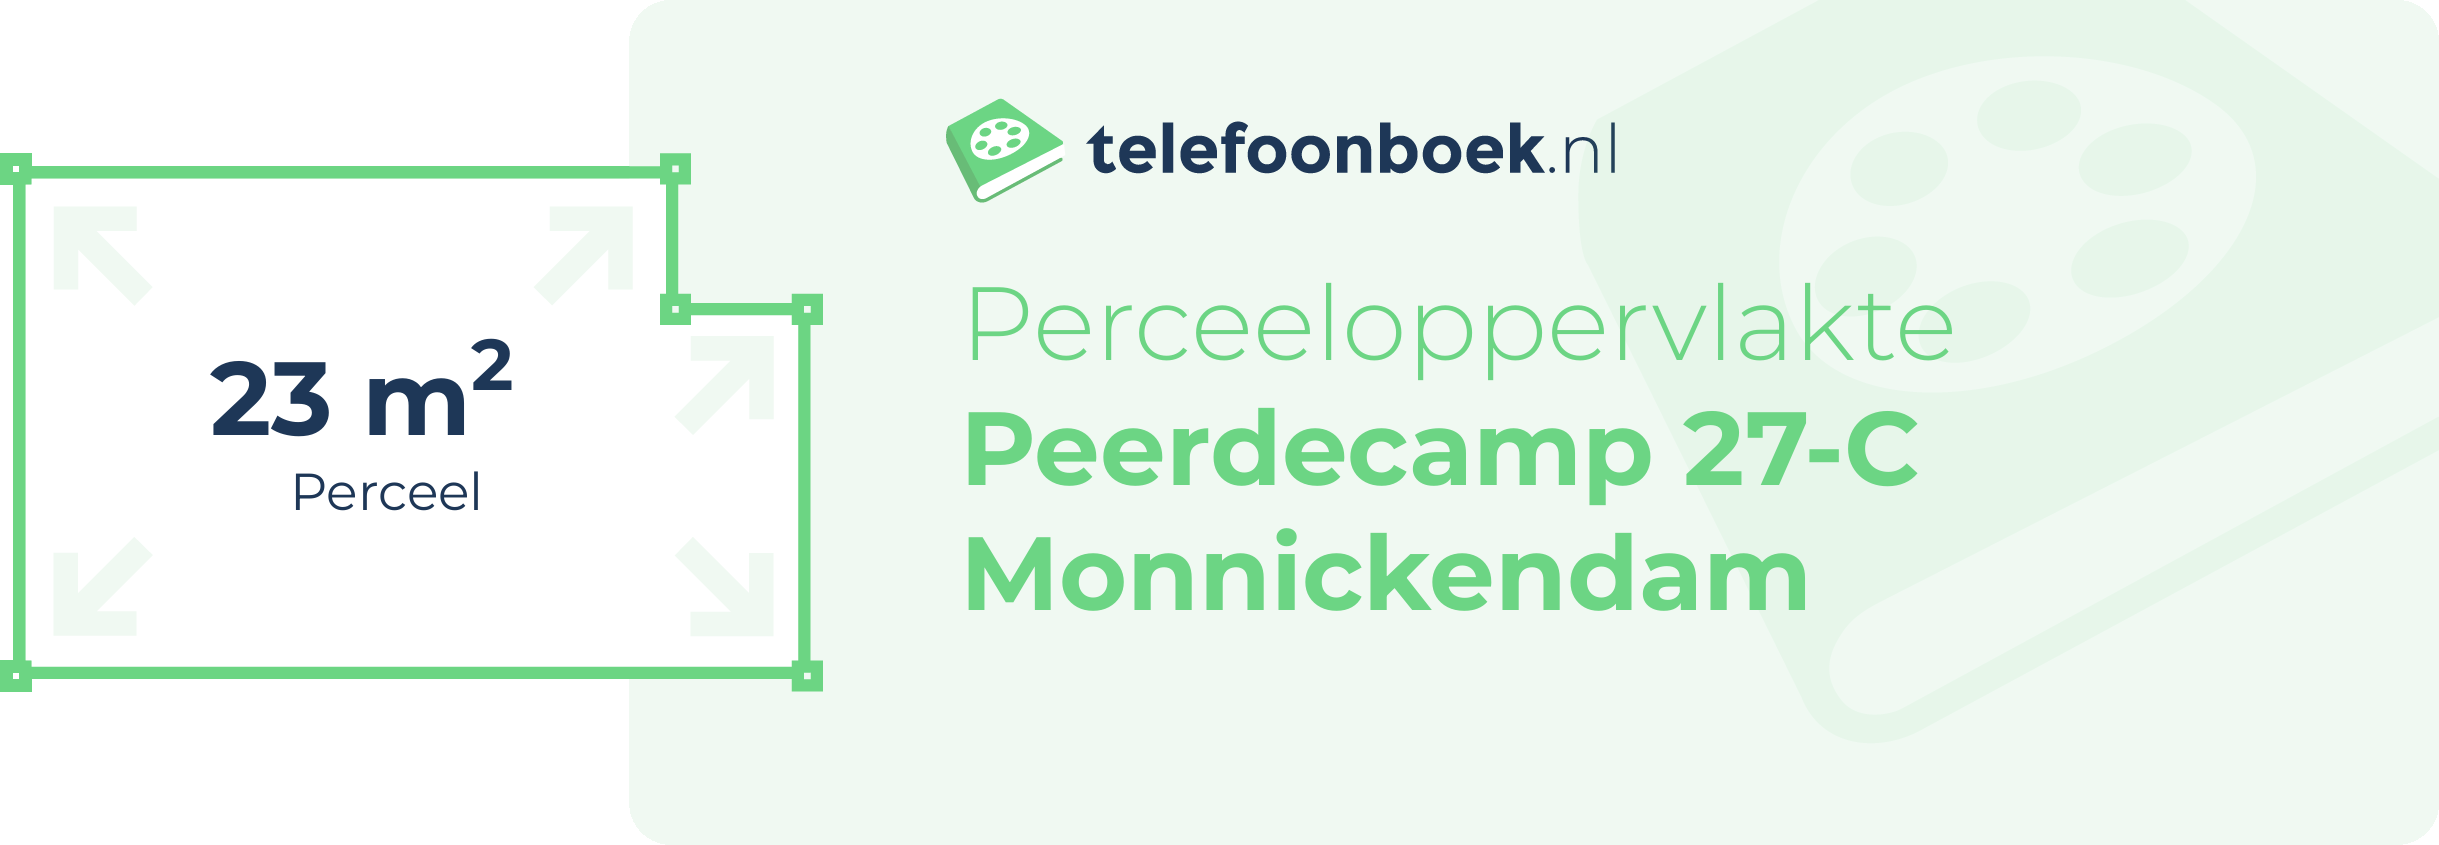 Perceeloppervlakte Peerdecamp 27-C Monnickendam